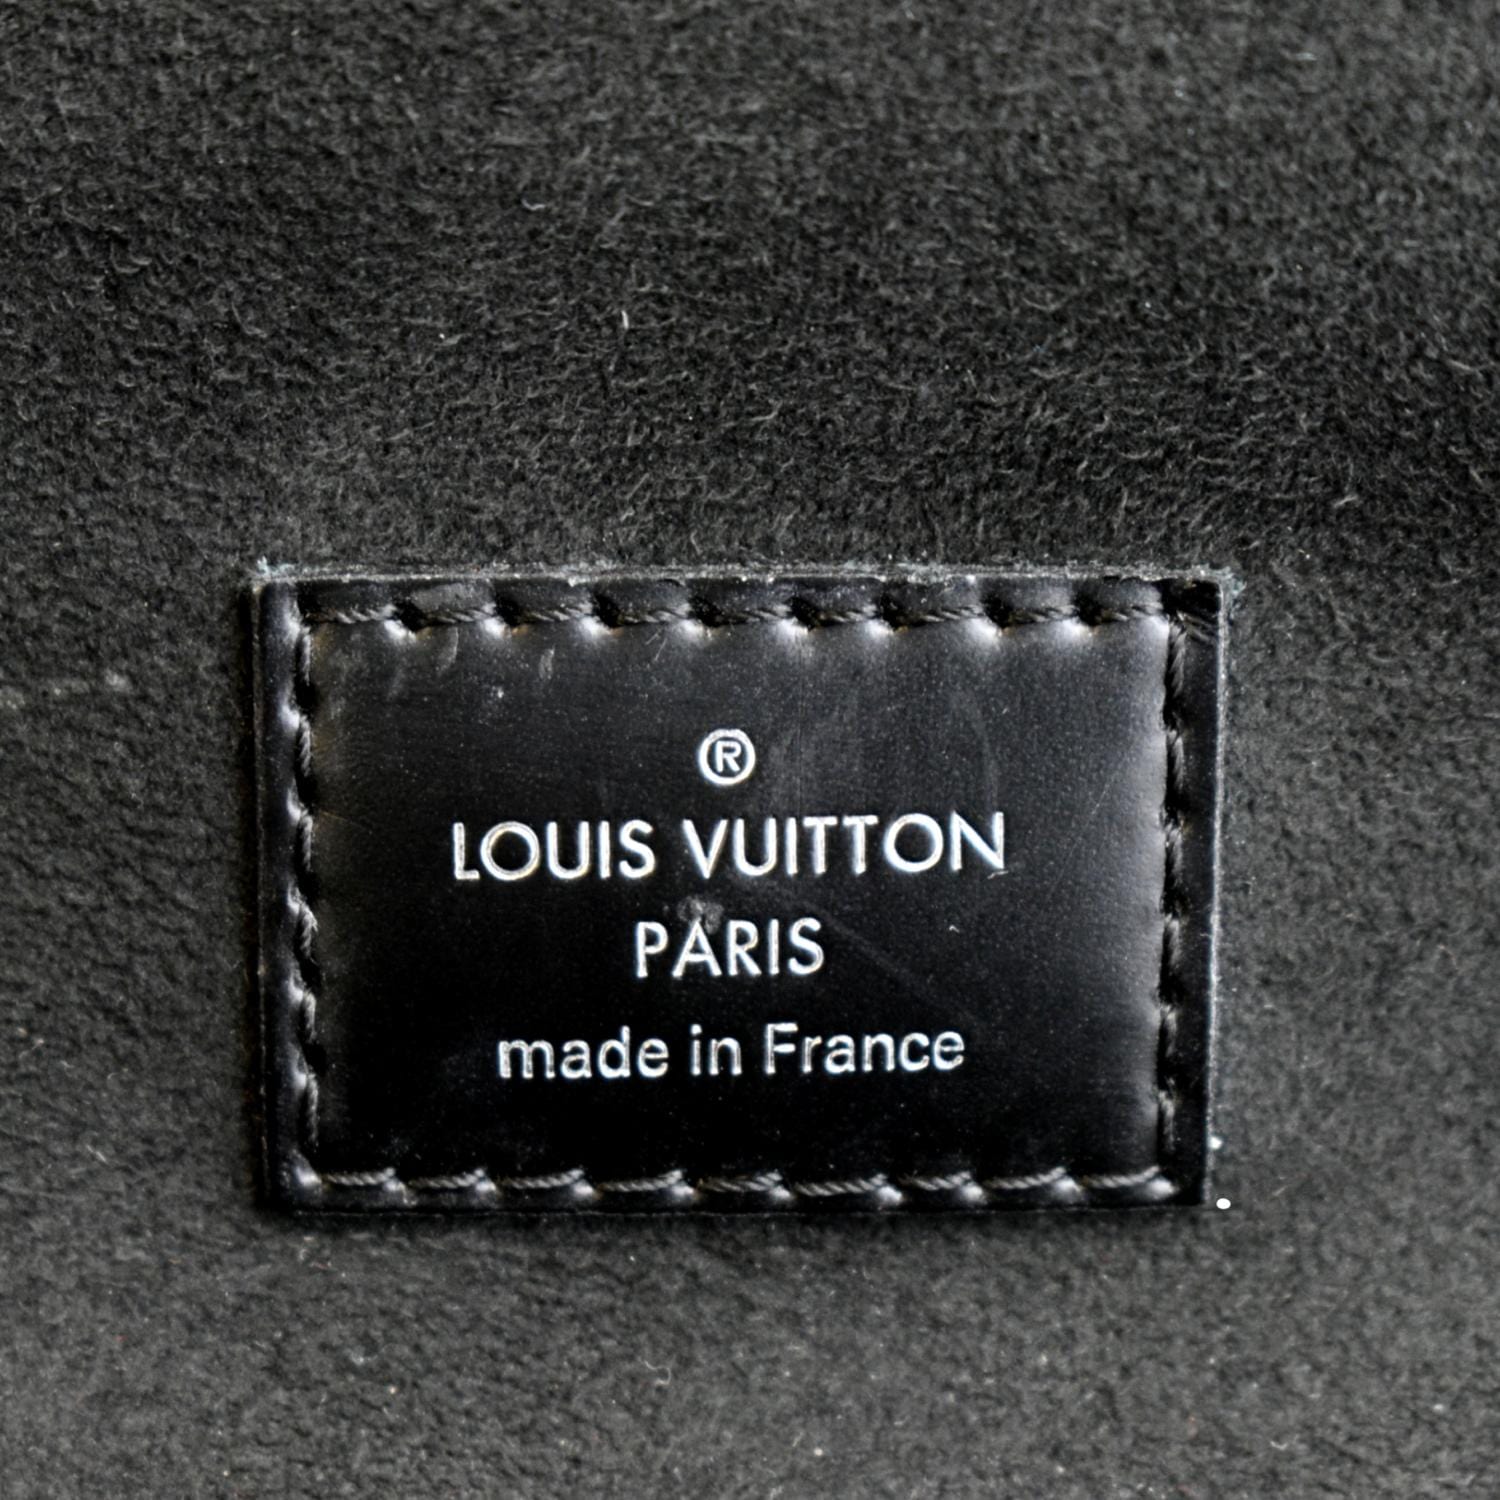 My delightful was peeling : r/Louisvuitton